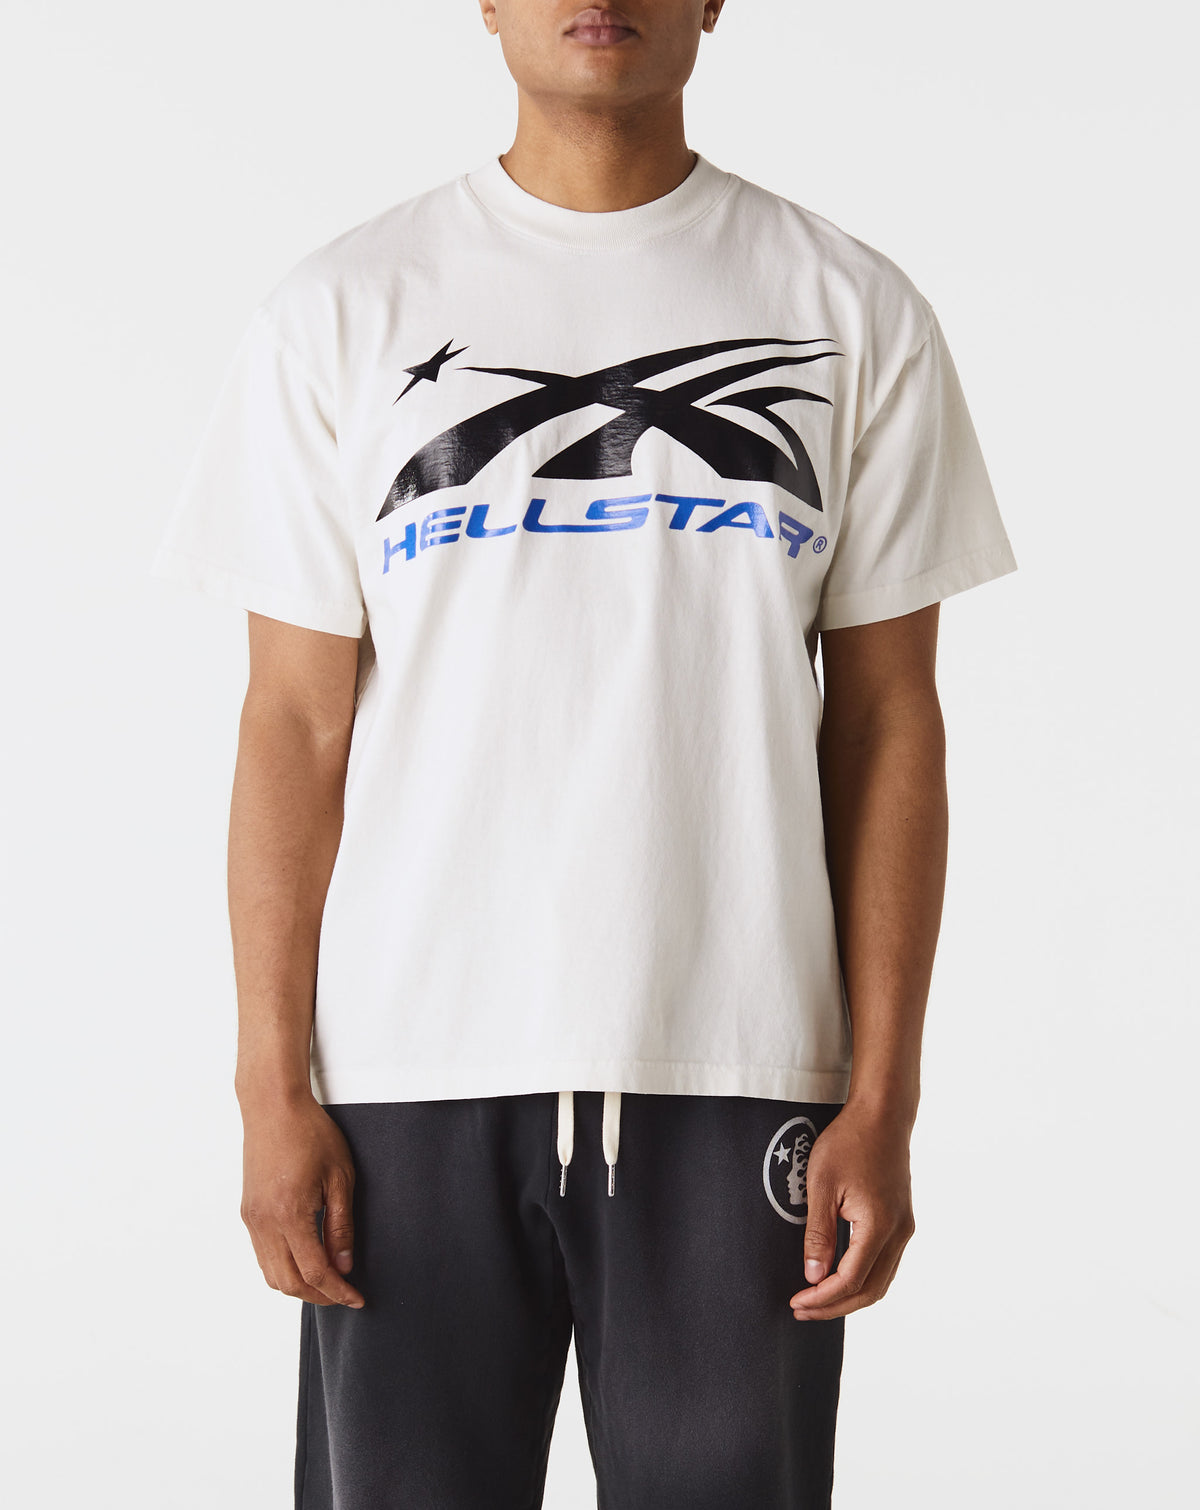 Hellstar Gel Sport Logo T-Shirt - Rule of Next Apparel